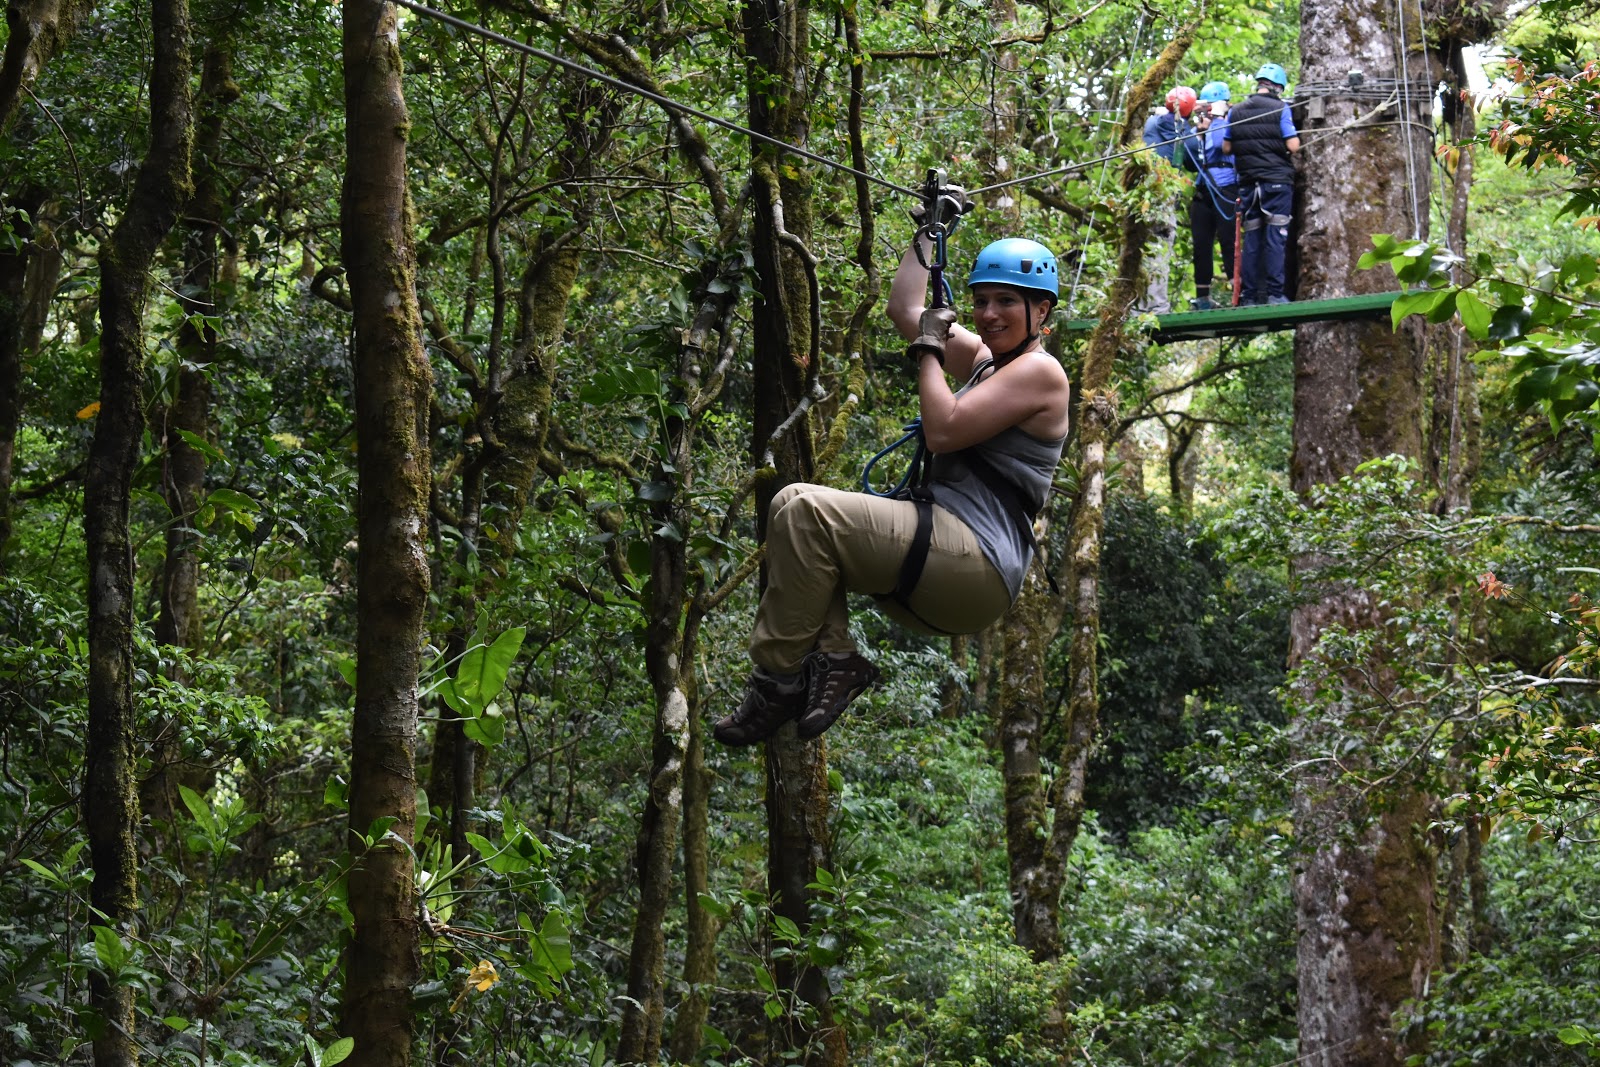 Ziplining in Costa Rica 2018